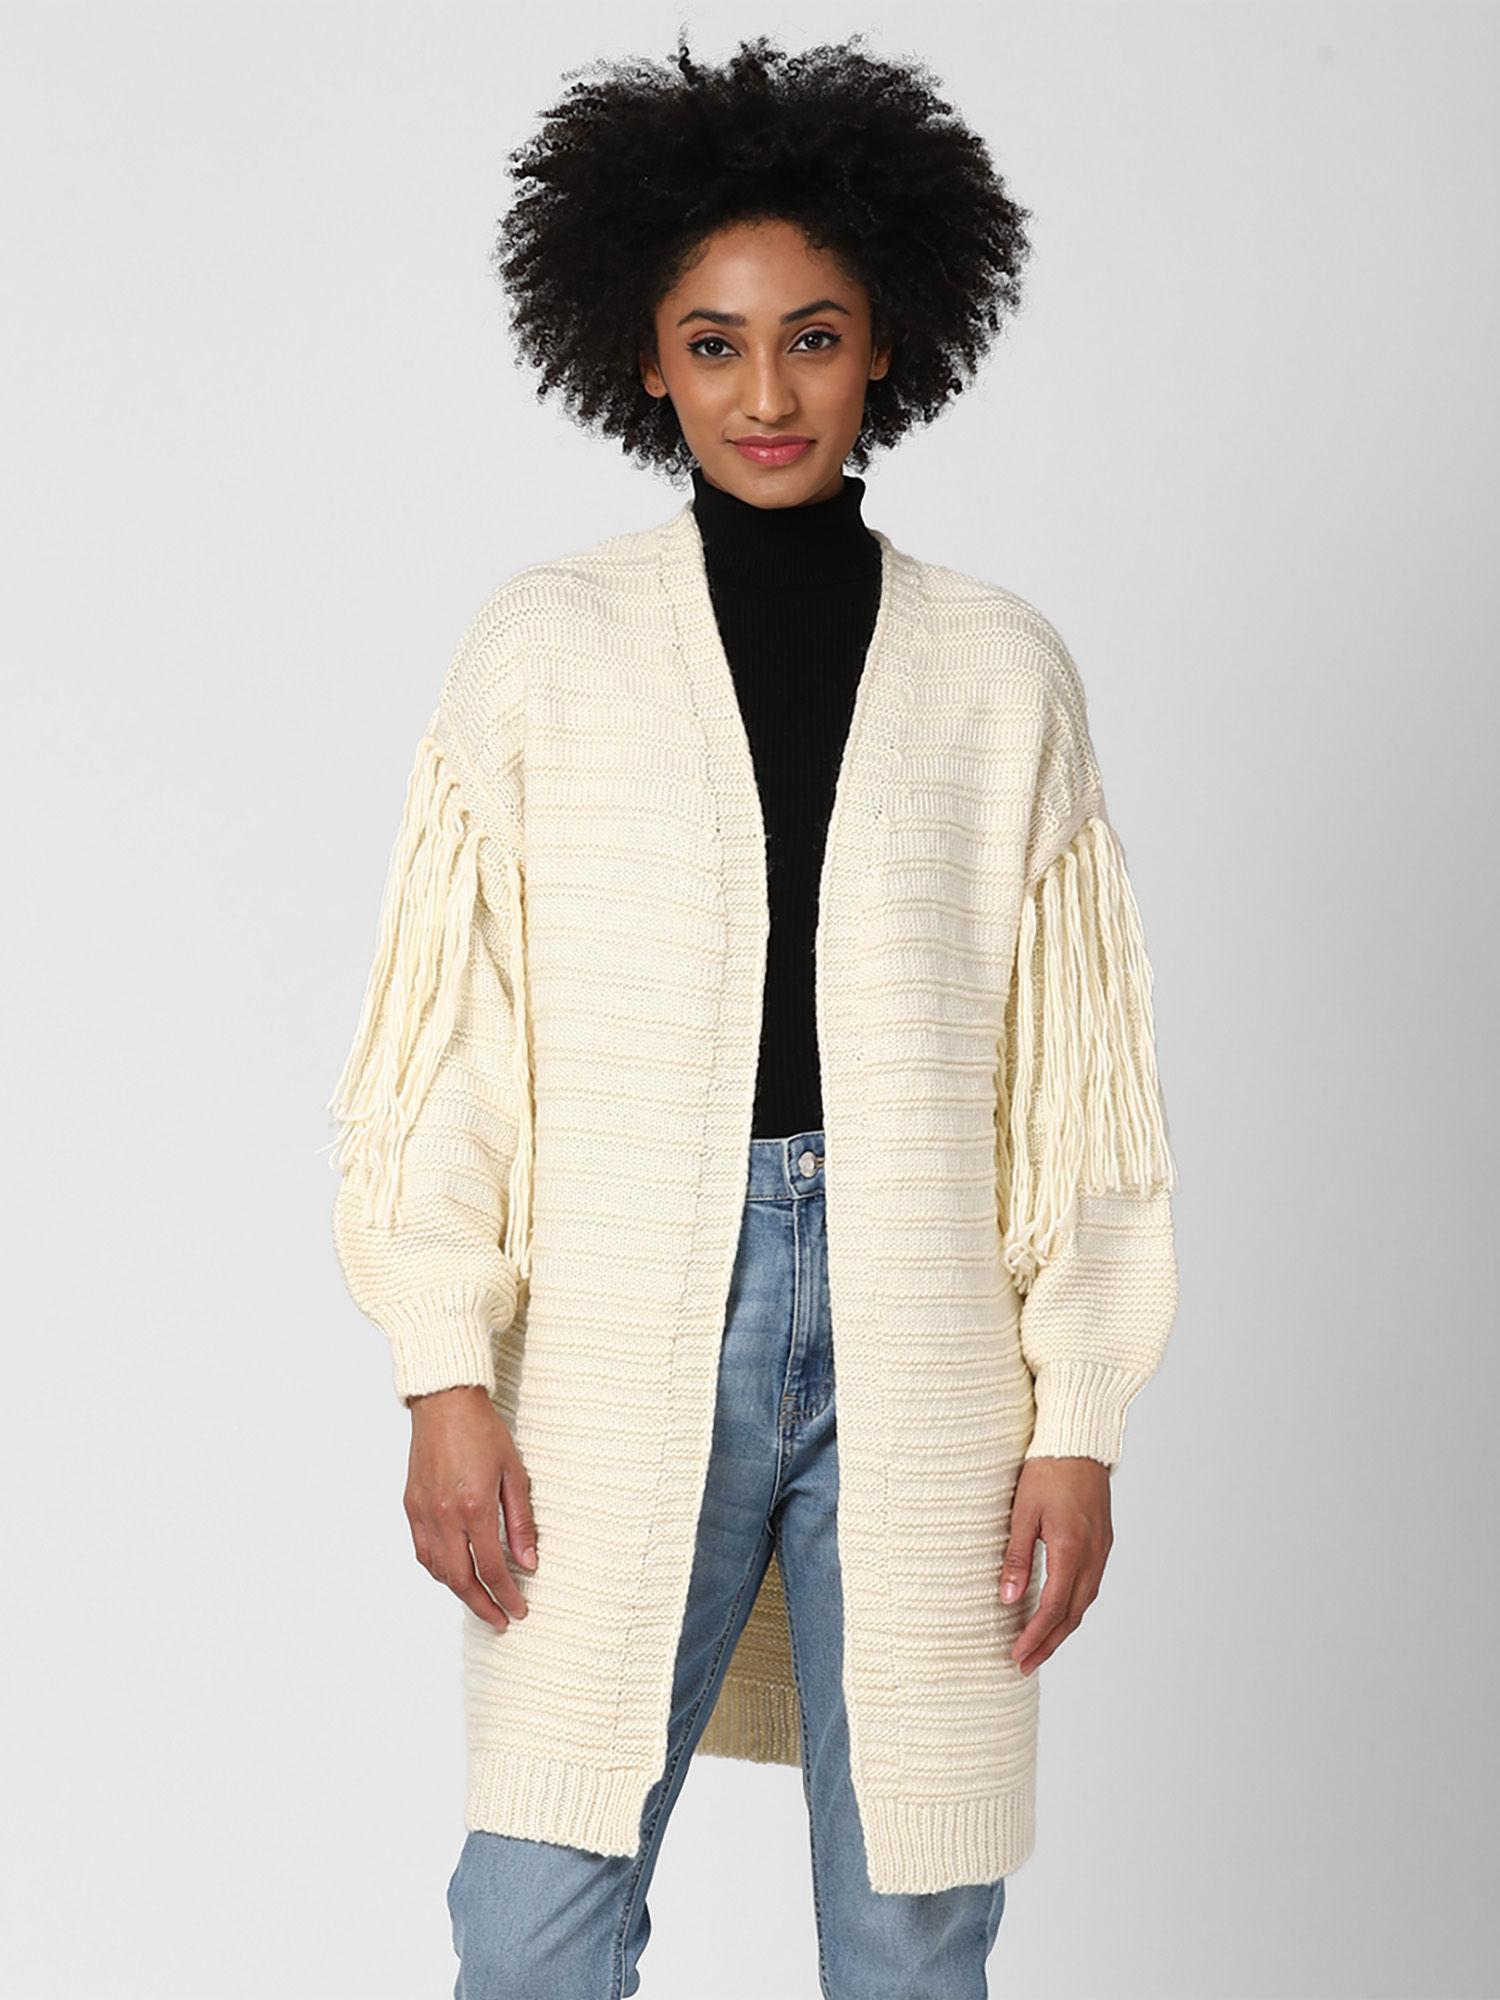 white-textured-sweater